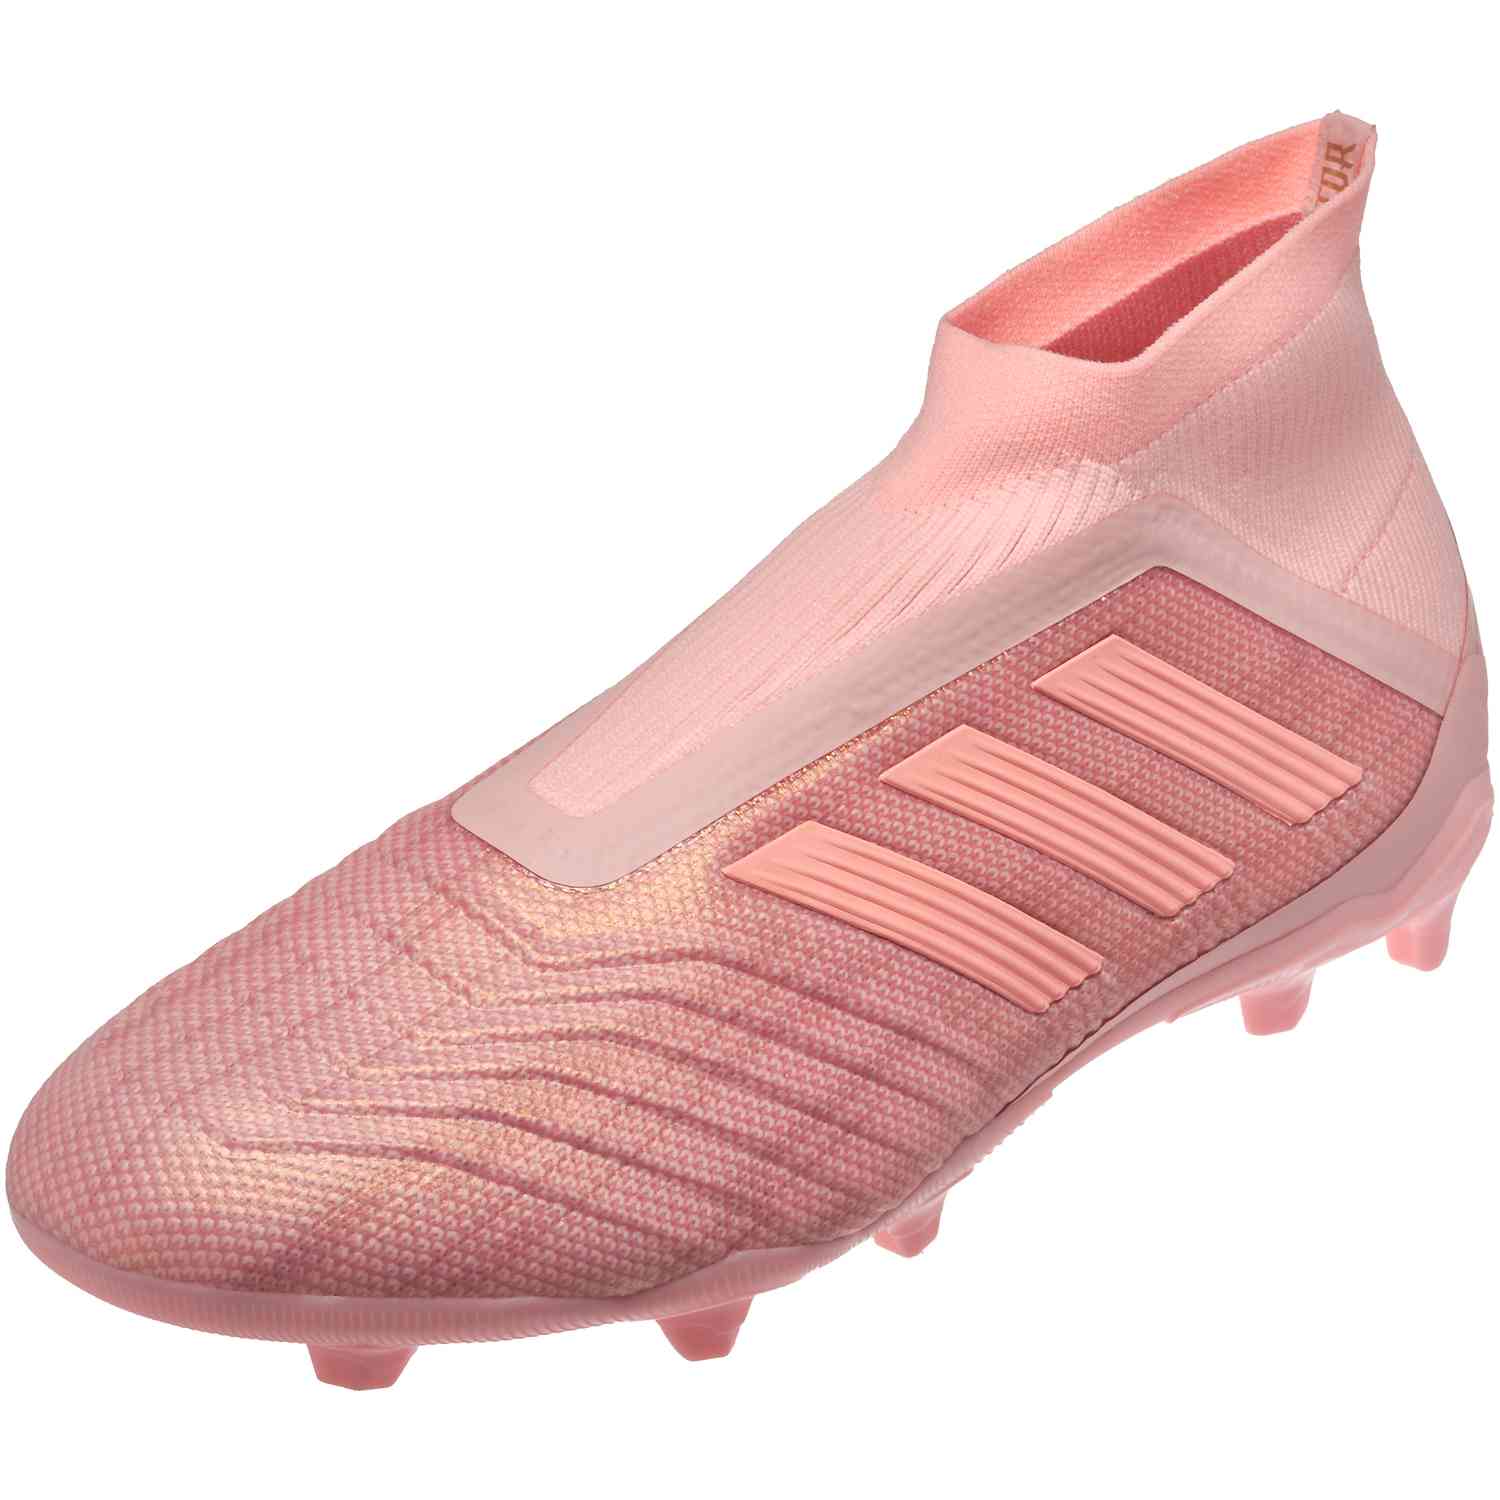 predator soccer cleats pink